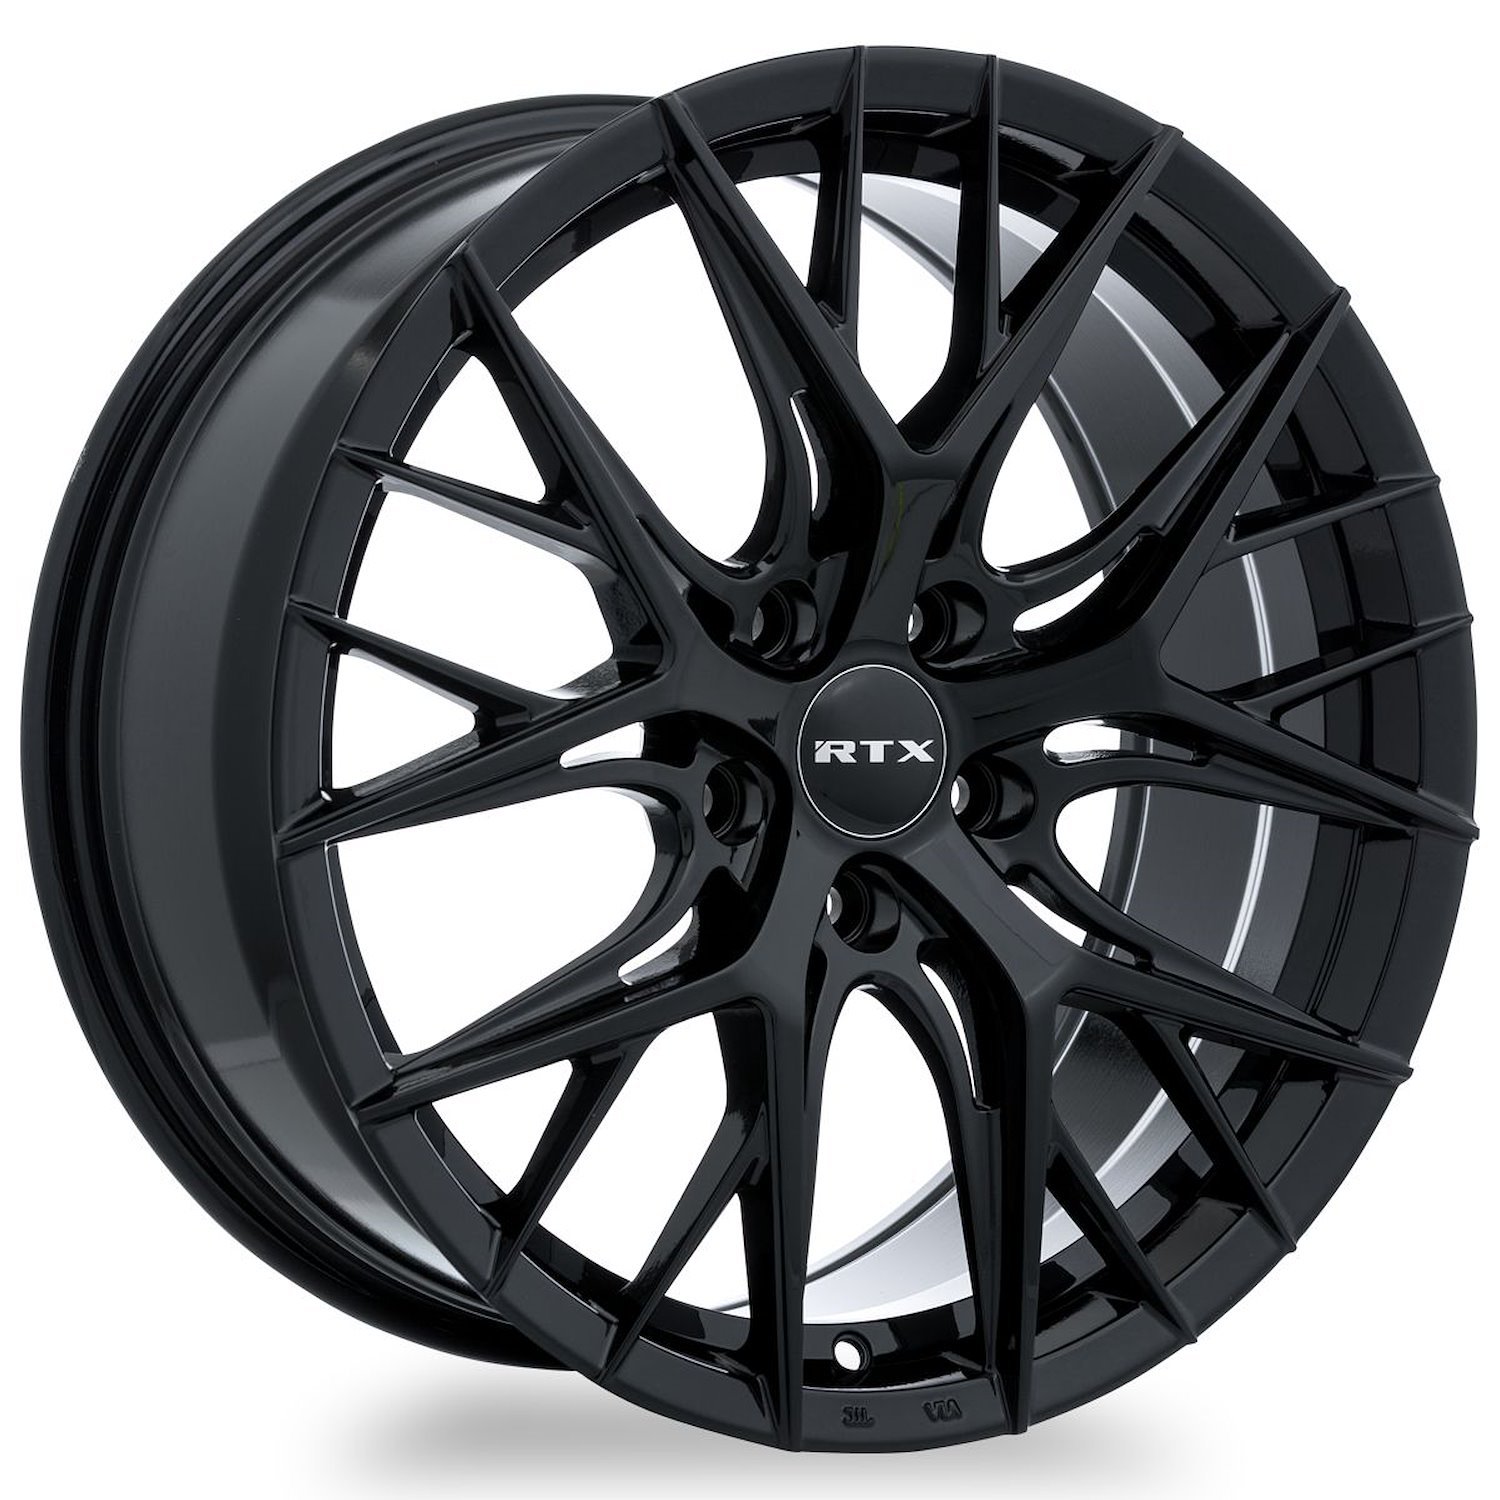 083039 RTX-Series Valkyrie Wheel [Size: 18" x 8"] Gloss Black Finish